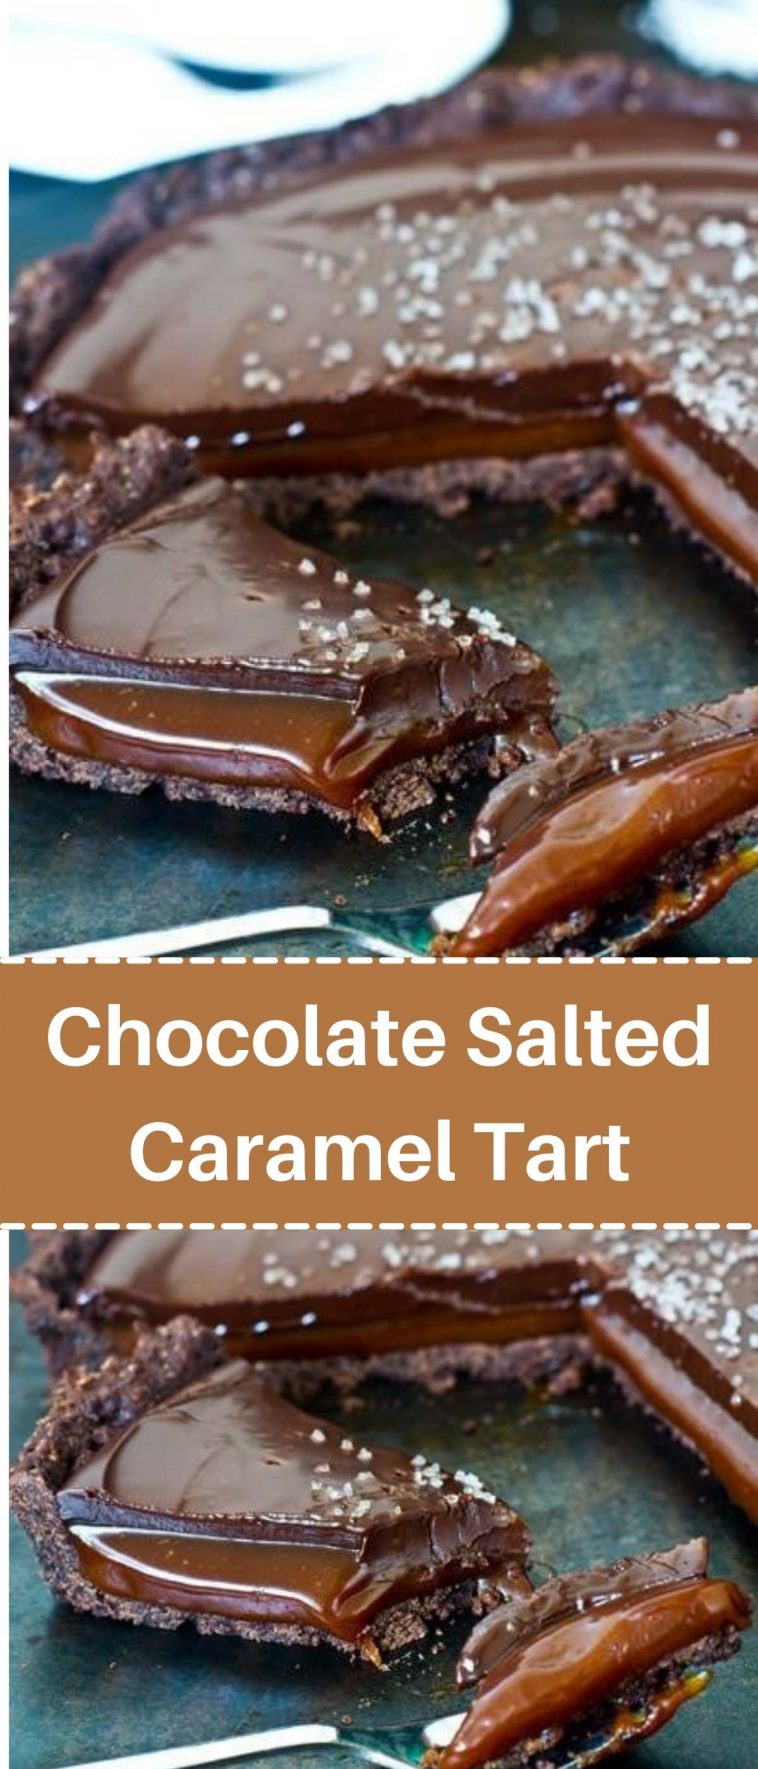 Chocolate Salted Caramel Tart